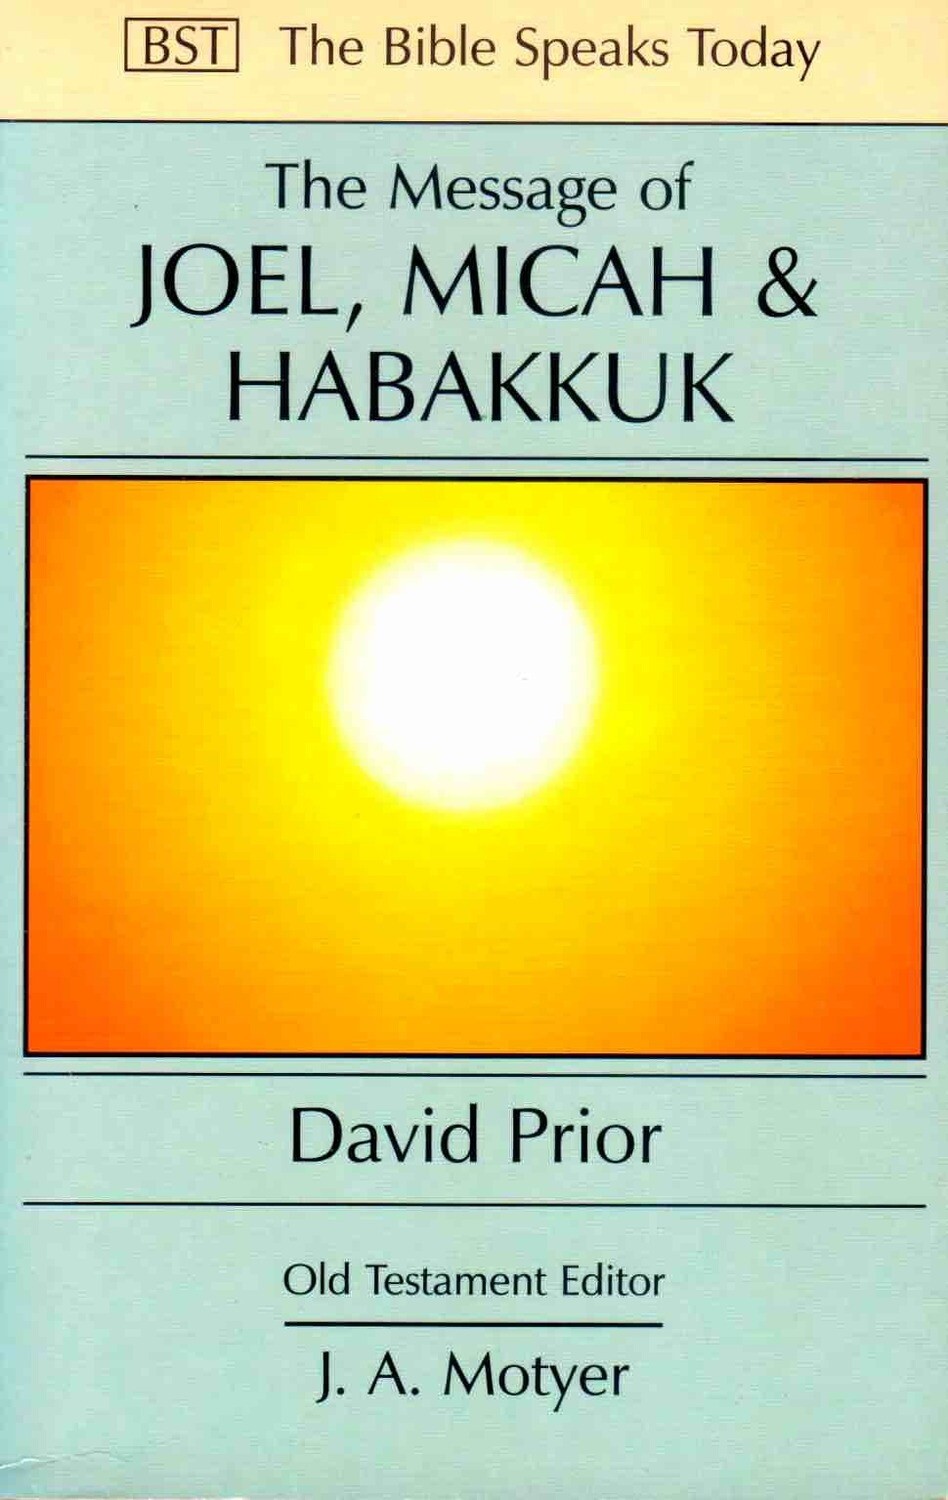 David Prior - The message of Joel Micah & Habakkuk